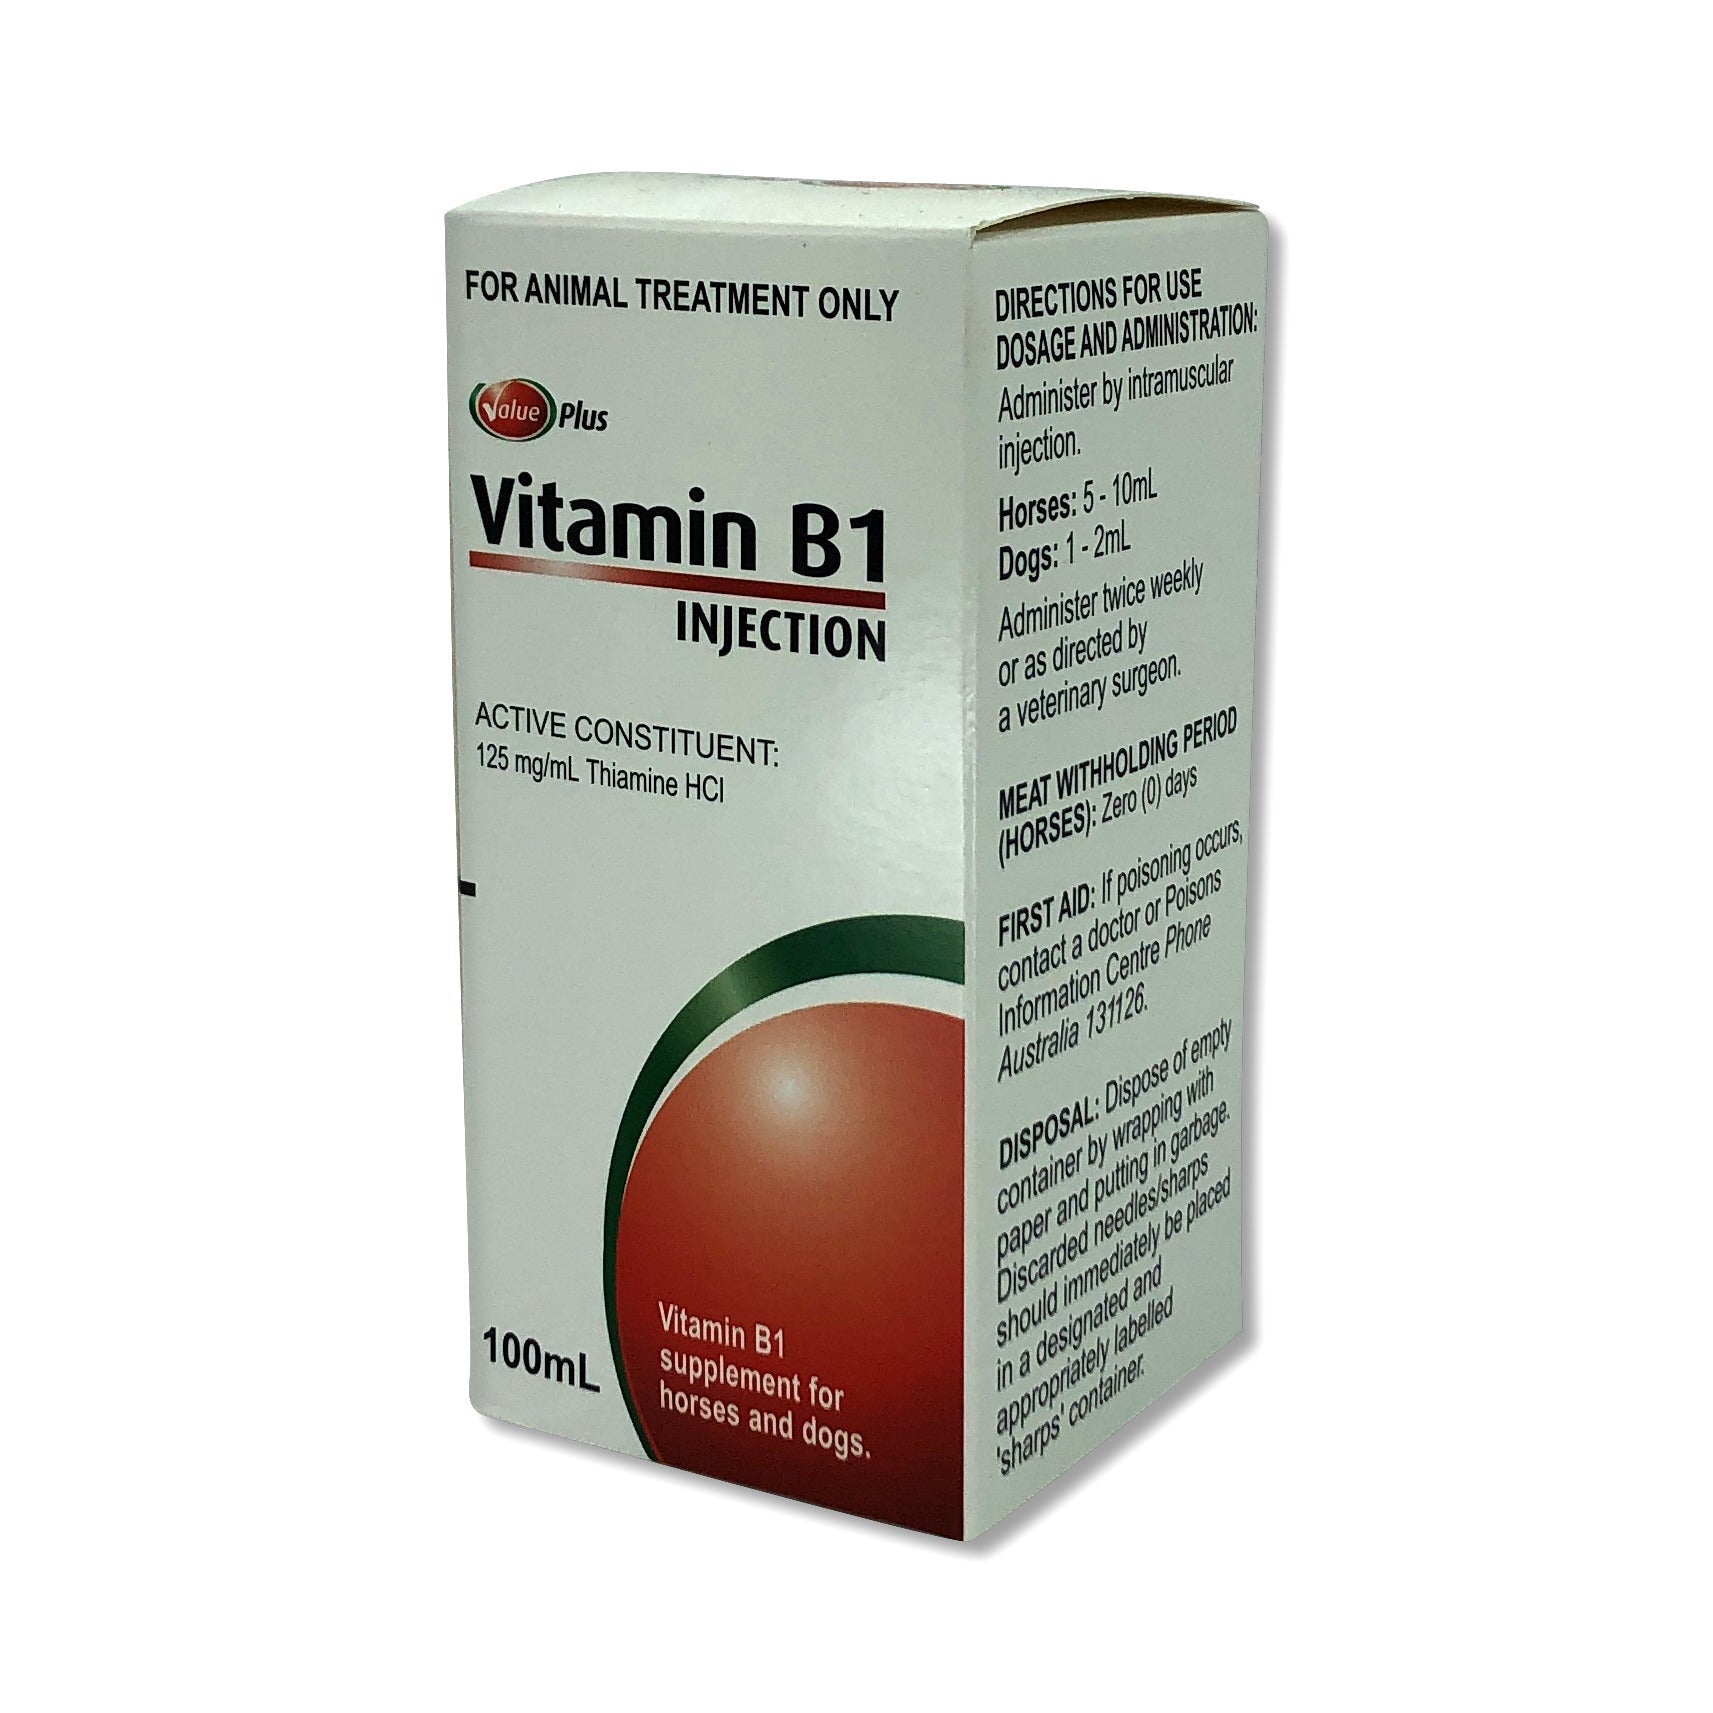 Value Plus Vitamin B1 Injection 100ml